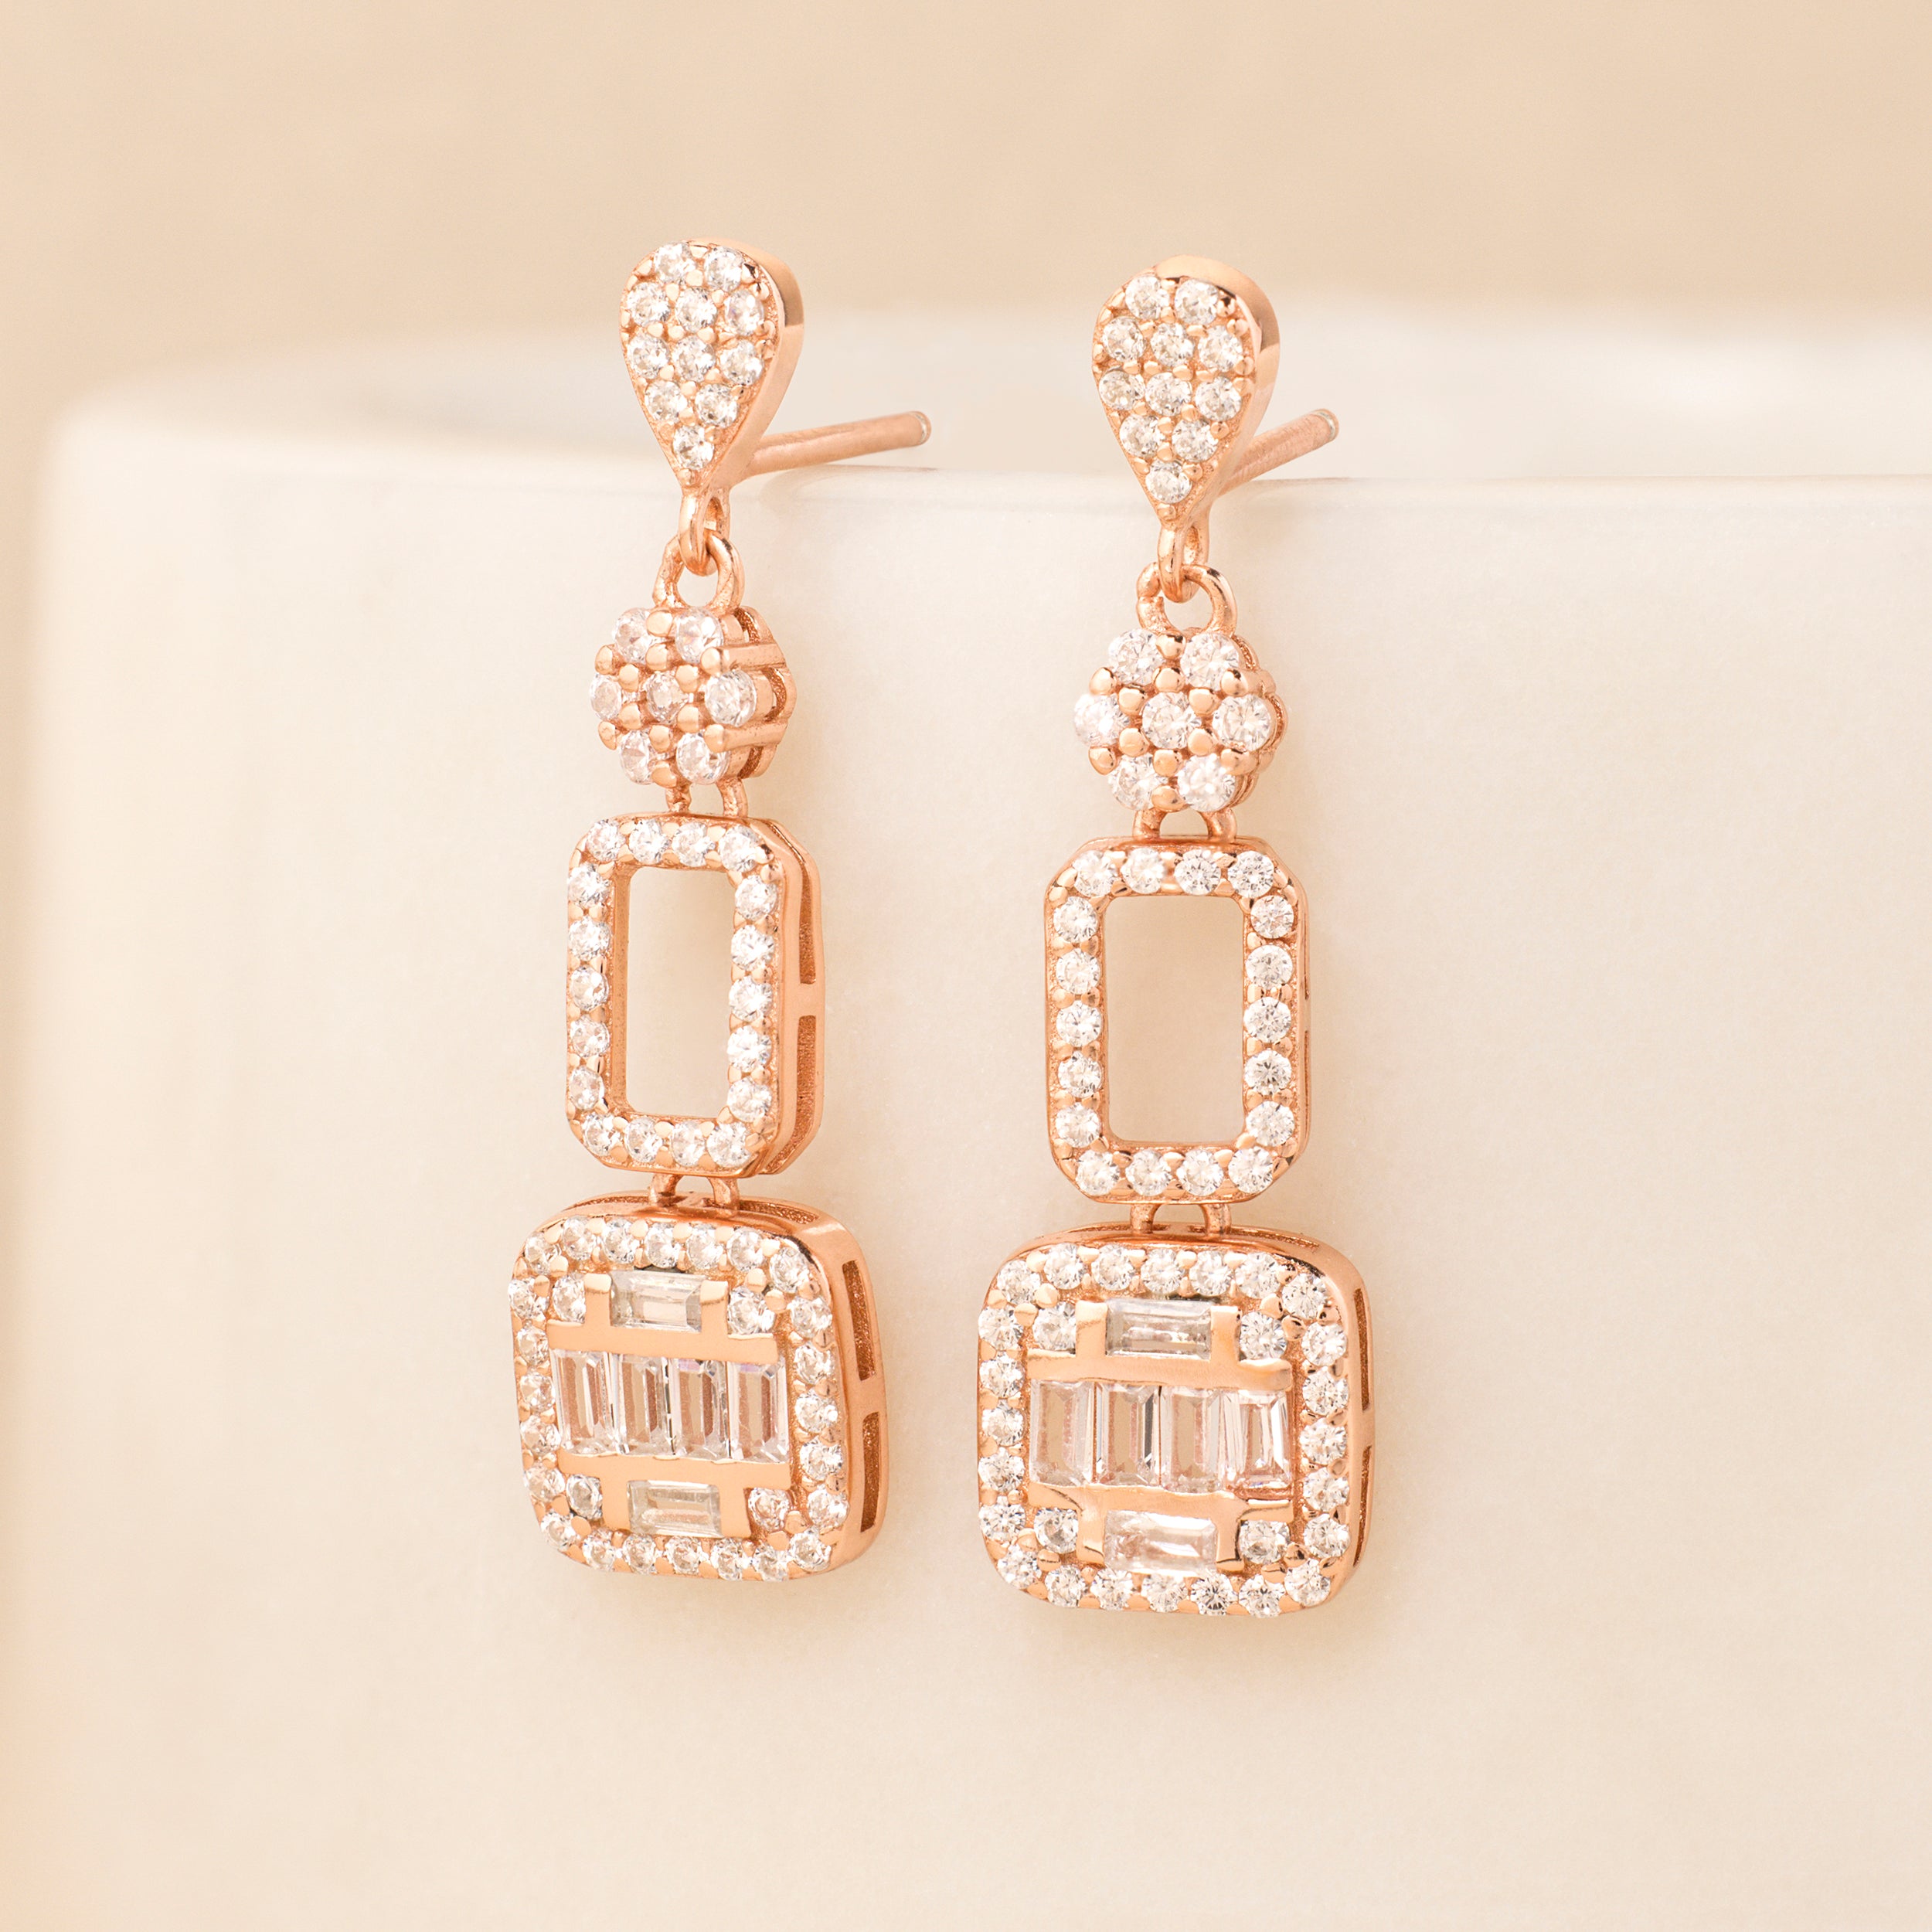 Designer Silver Royal Drop Earrings in Luxe Rose Gold | SKU: 0019281247, 0019280912, 0019280950